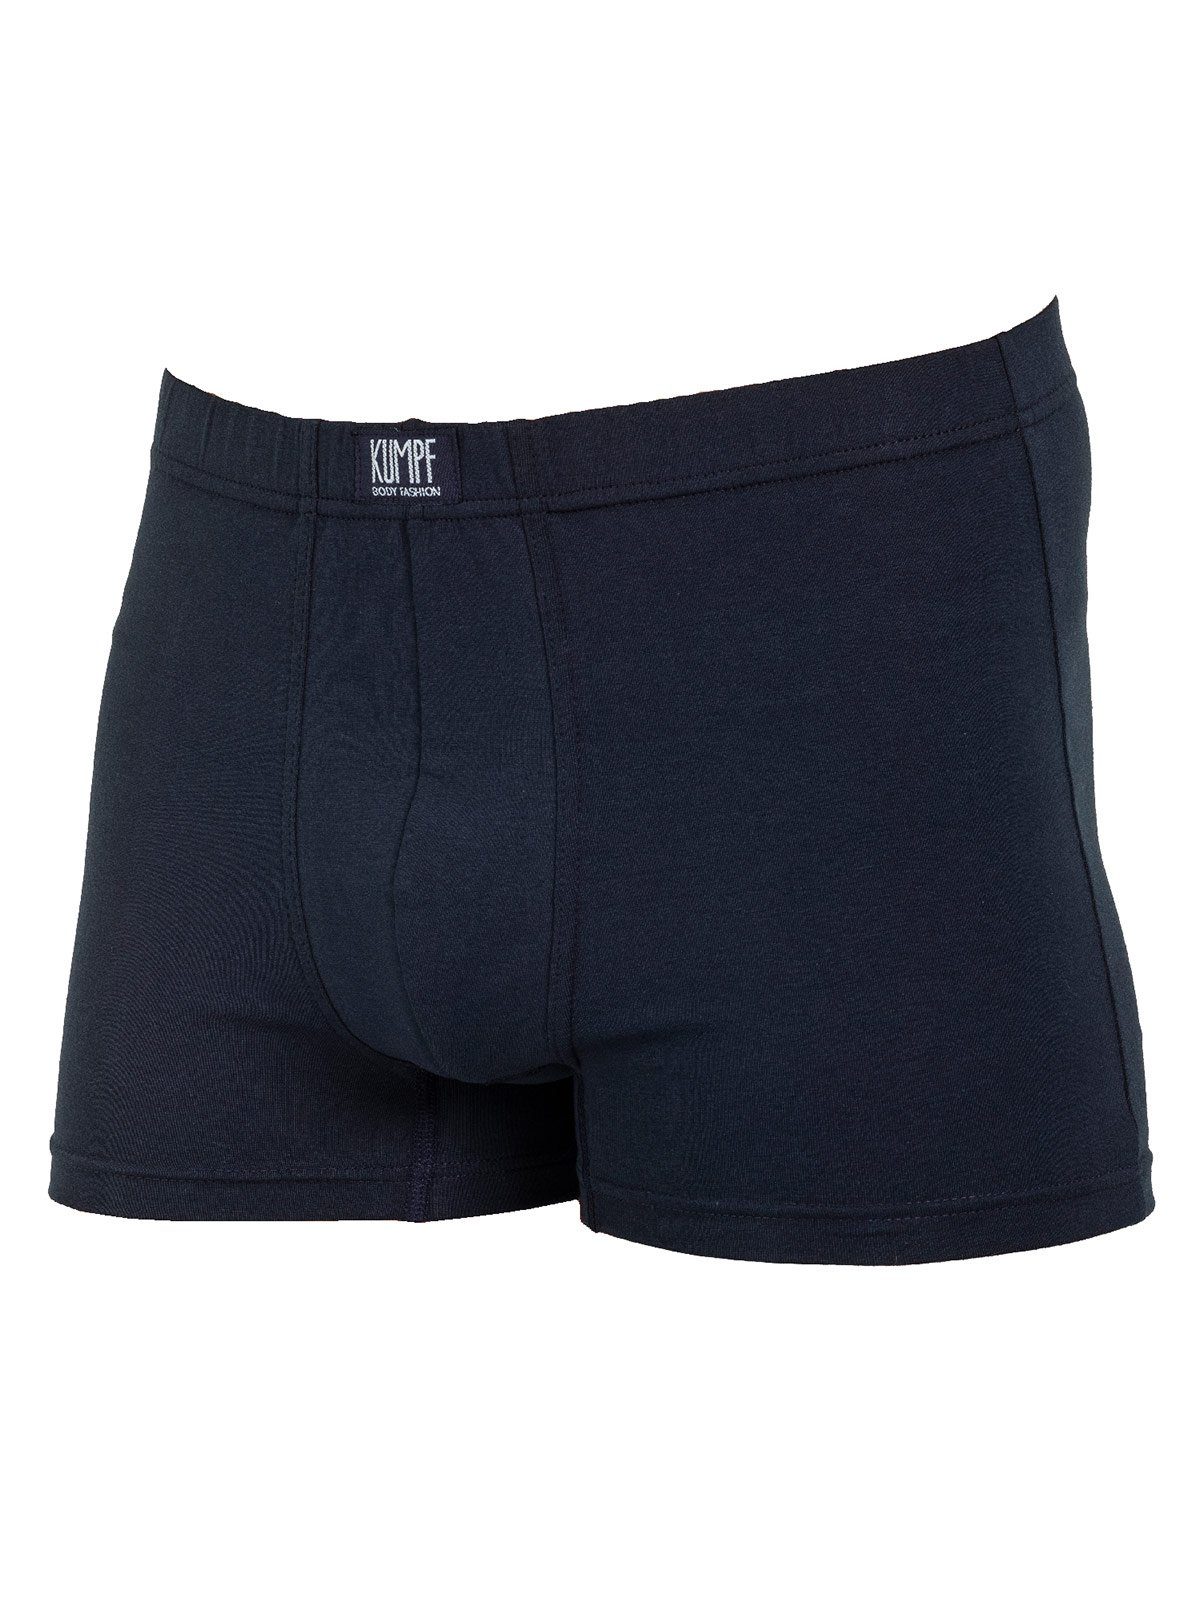 Pants Bio Retro KUMPF schwarz Cotton Sparpack Pants 2er navy hohe Markenqualität (Spar-Set, 2-St) Herren